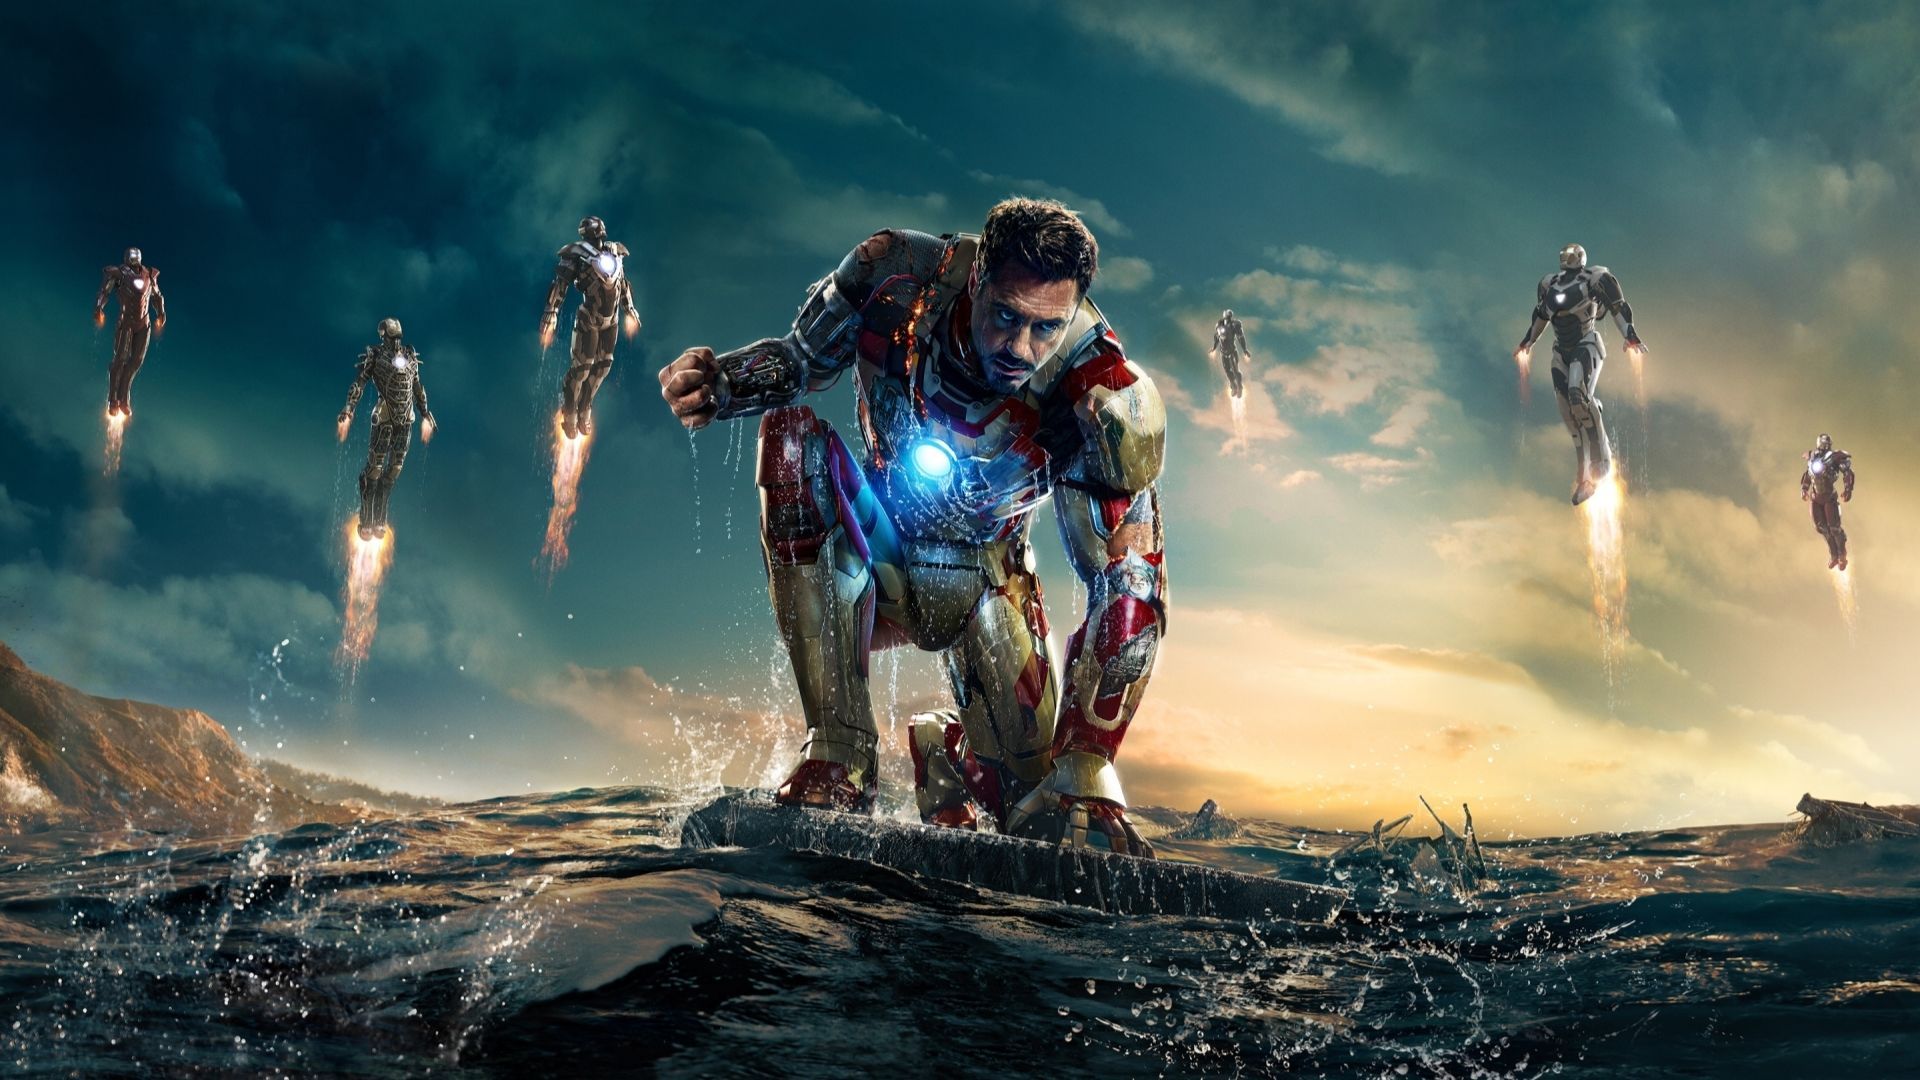 Iron Man 3 New Mac Wallpaper Download | Free Mac Wallpapers Download